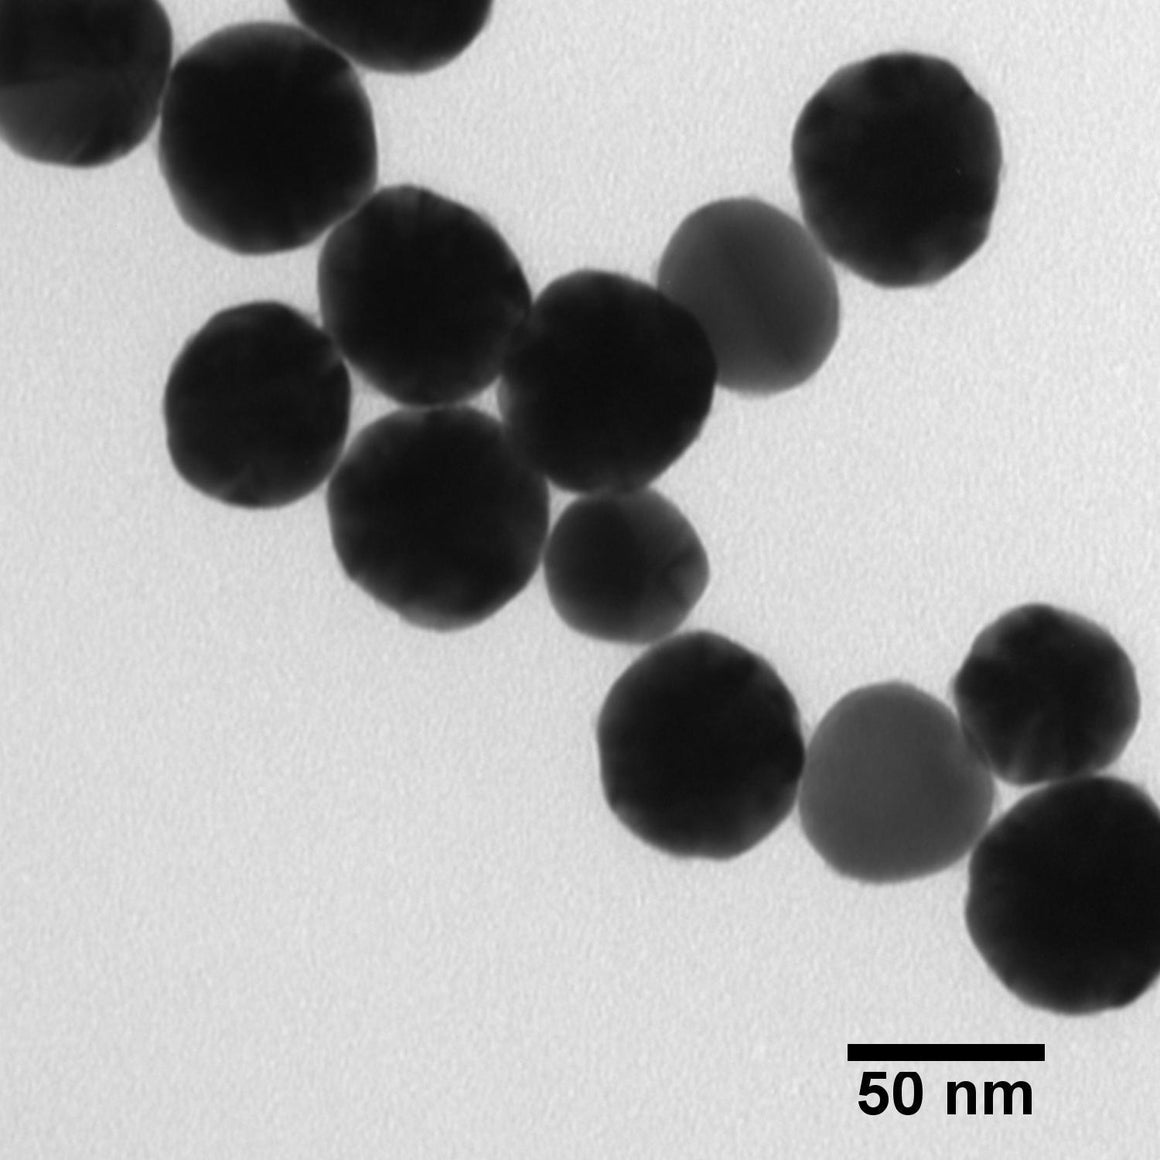 NanoXact Gold Nanospheres – PVP (Dried)